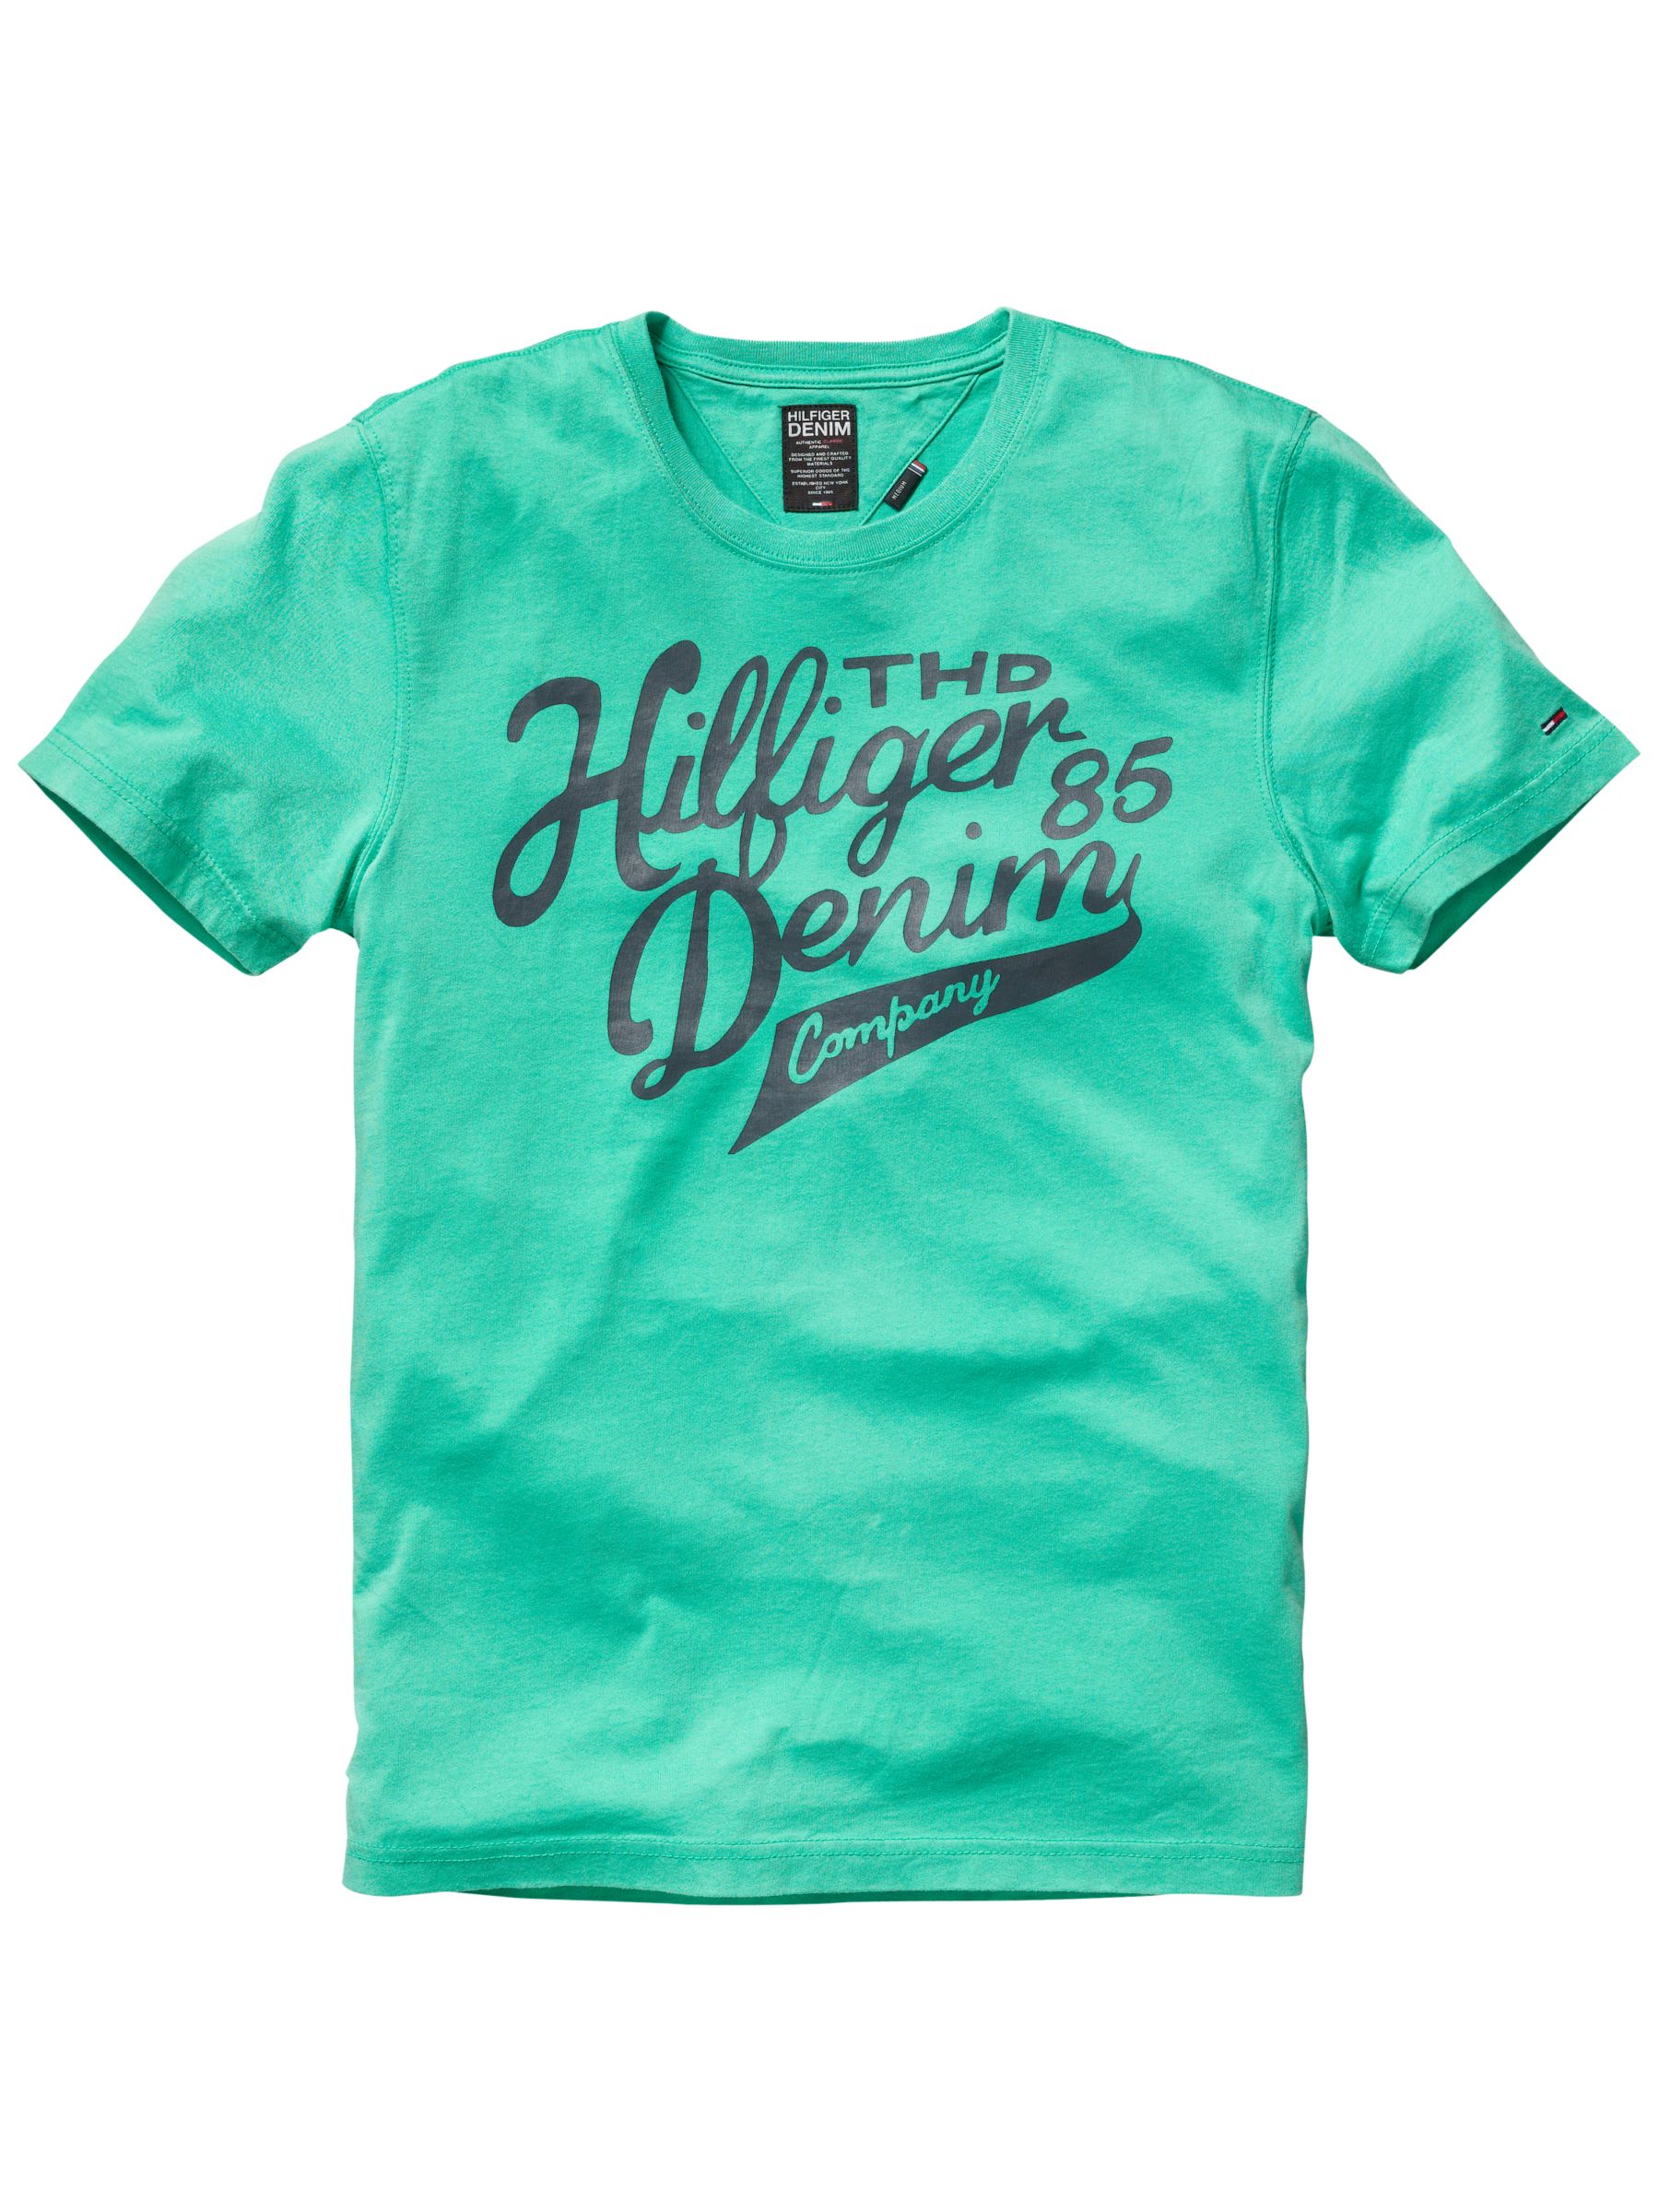 Hilfiger Denim Federer Logo Print T-Shirt, Green